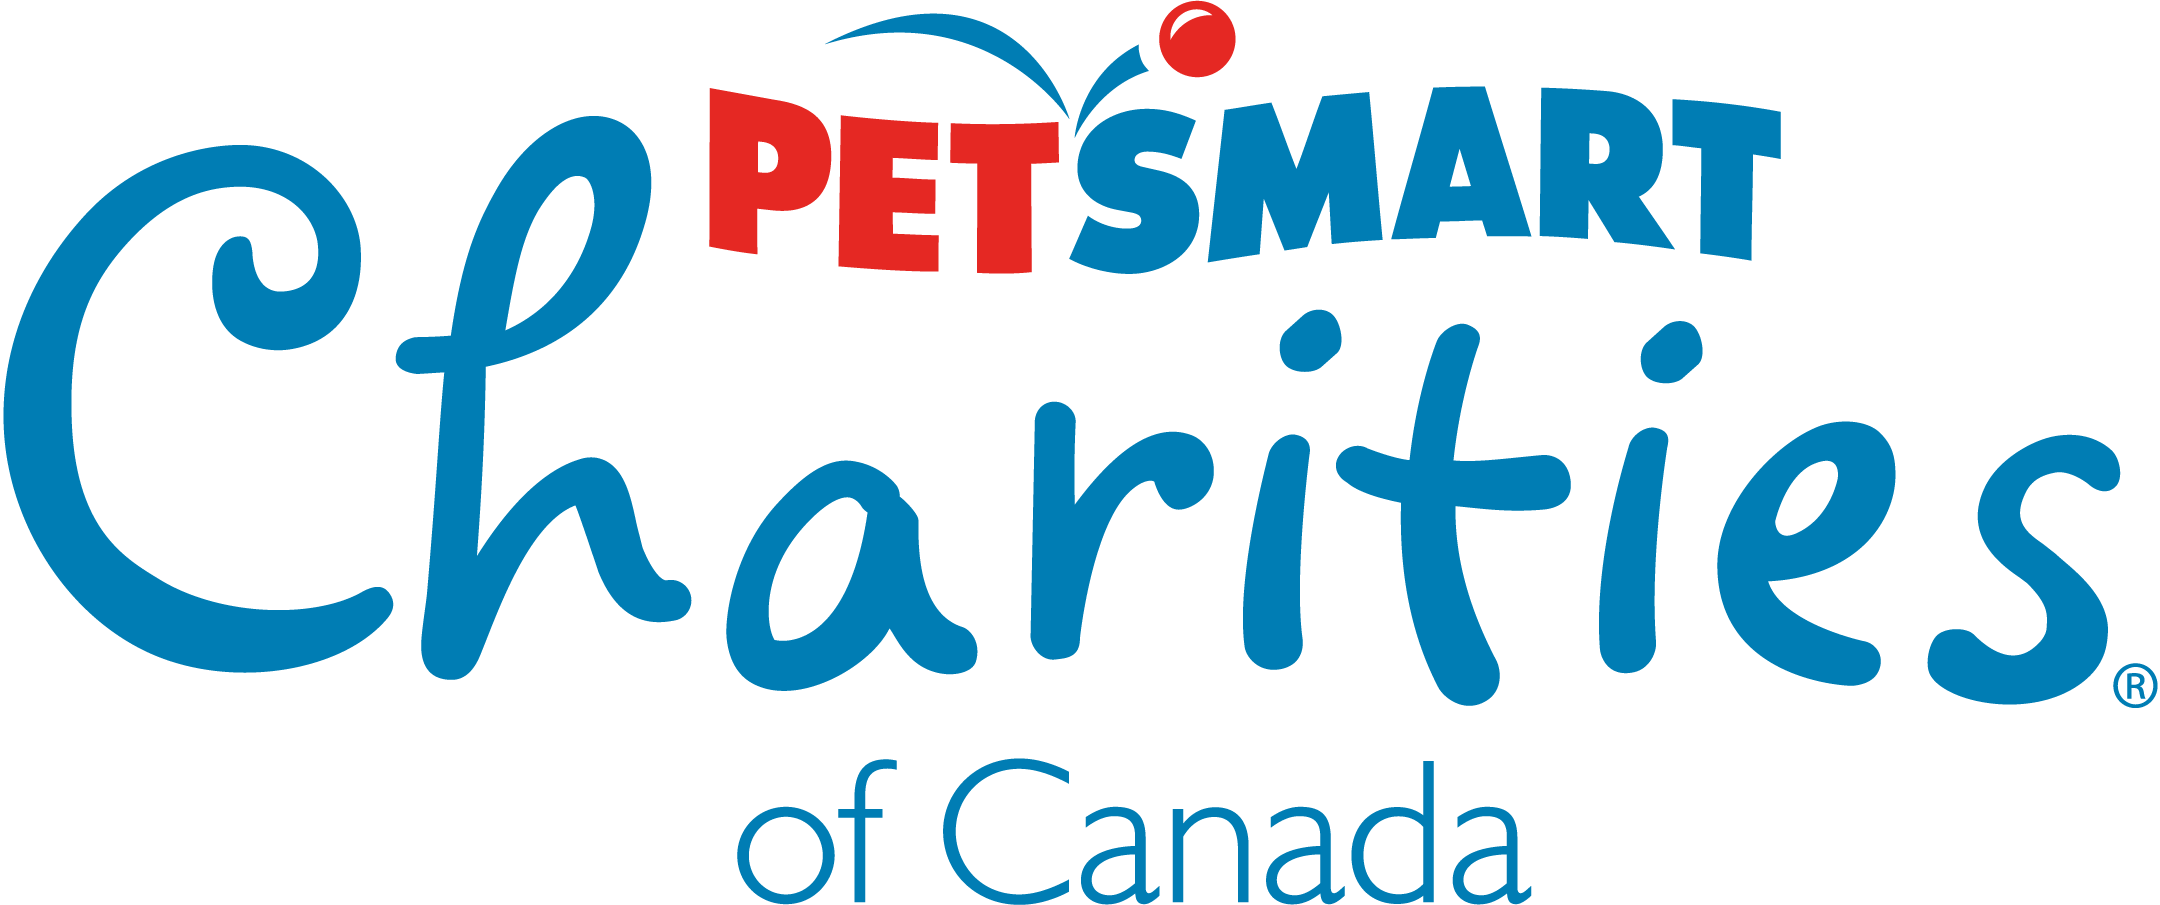 Petsmart charities of canada logo